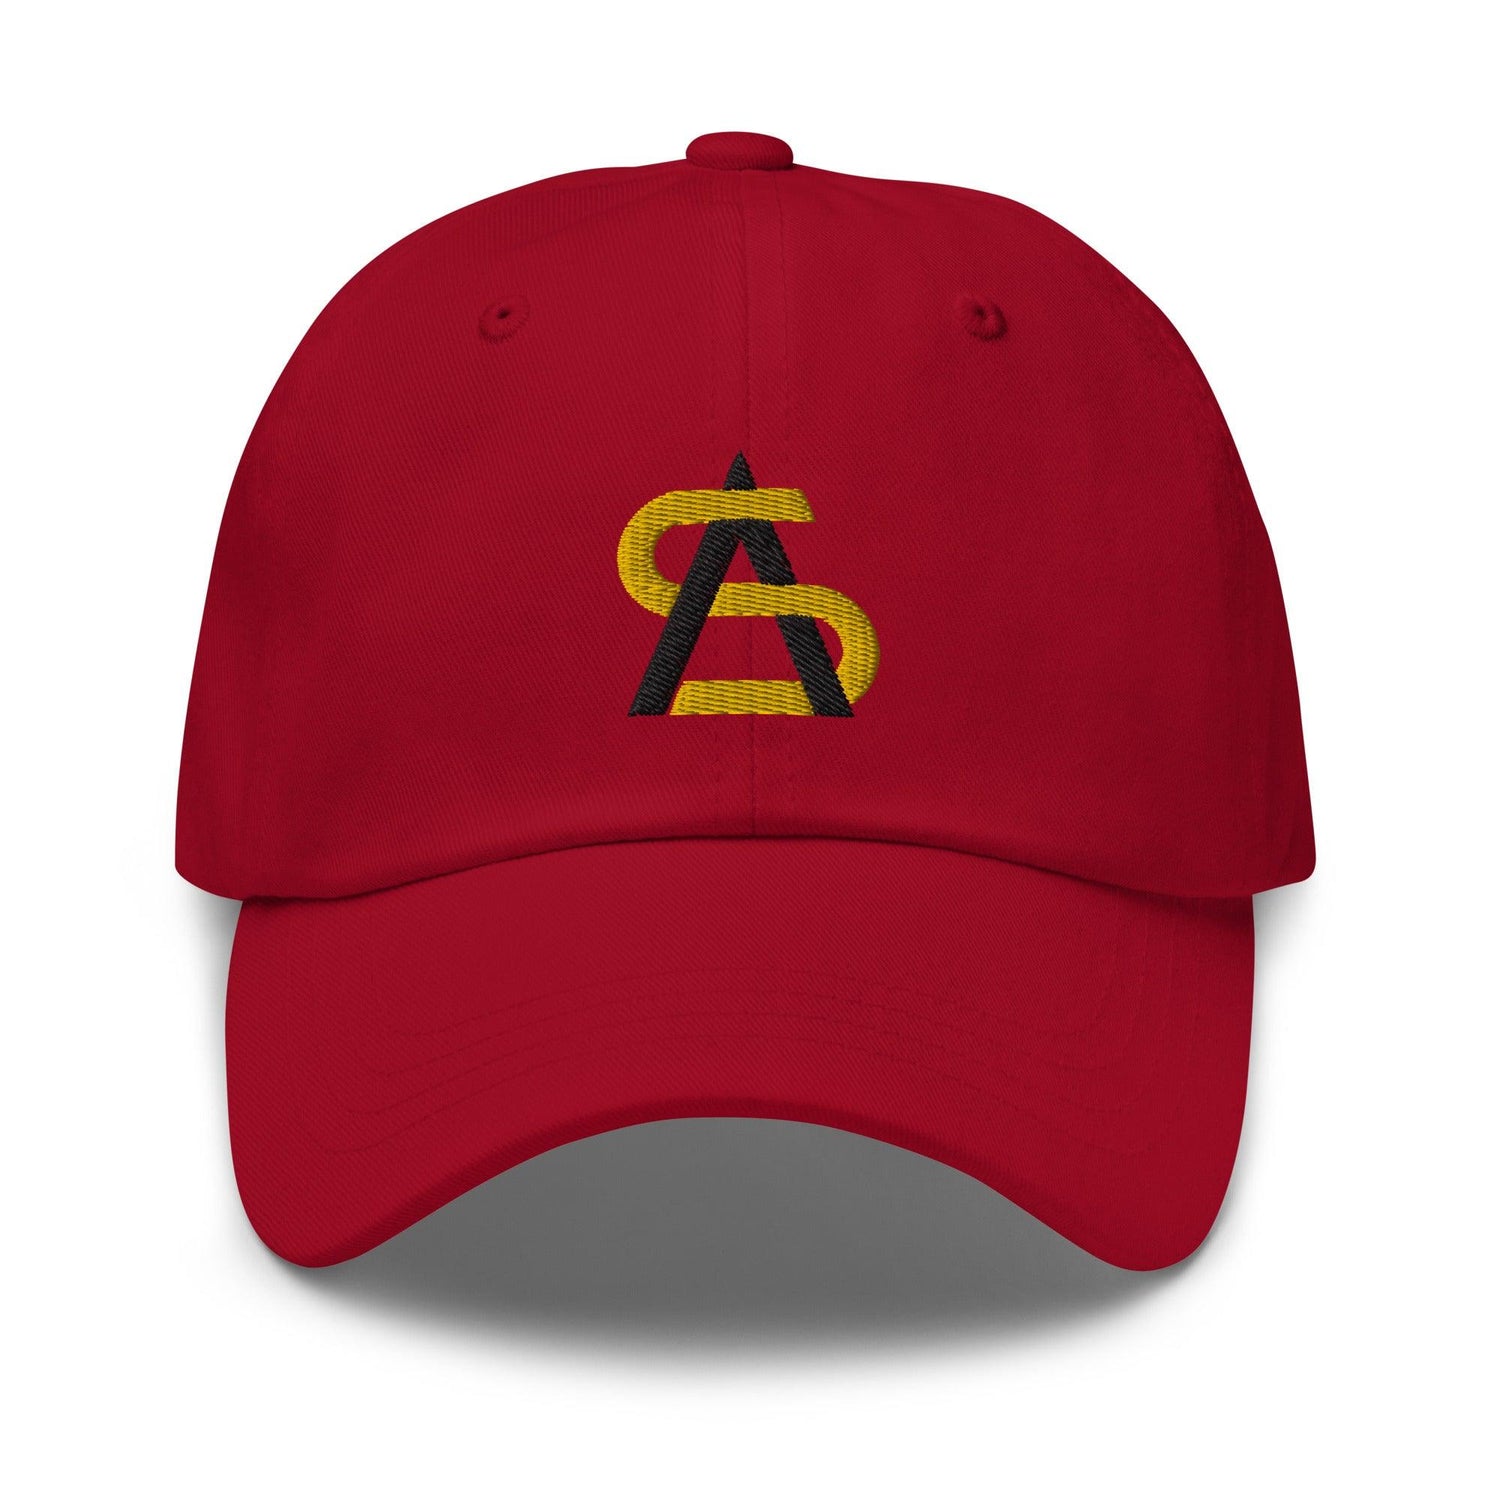 Adam Sparks "Essential" hat - Fan Arch